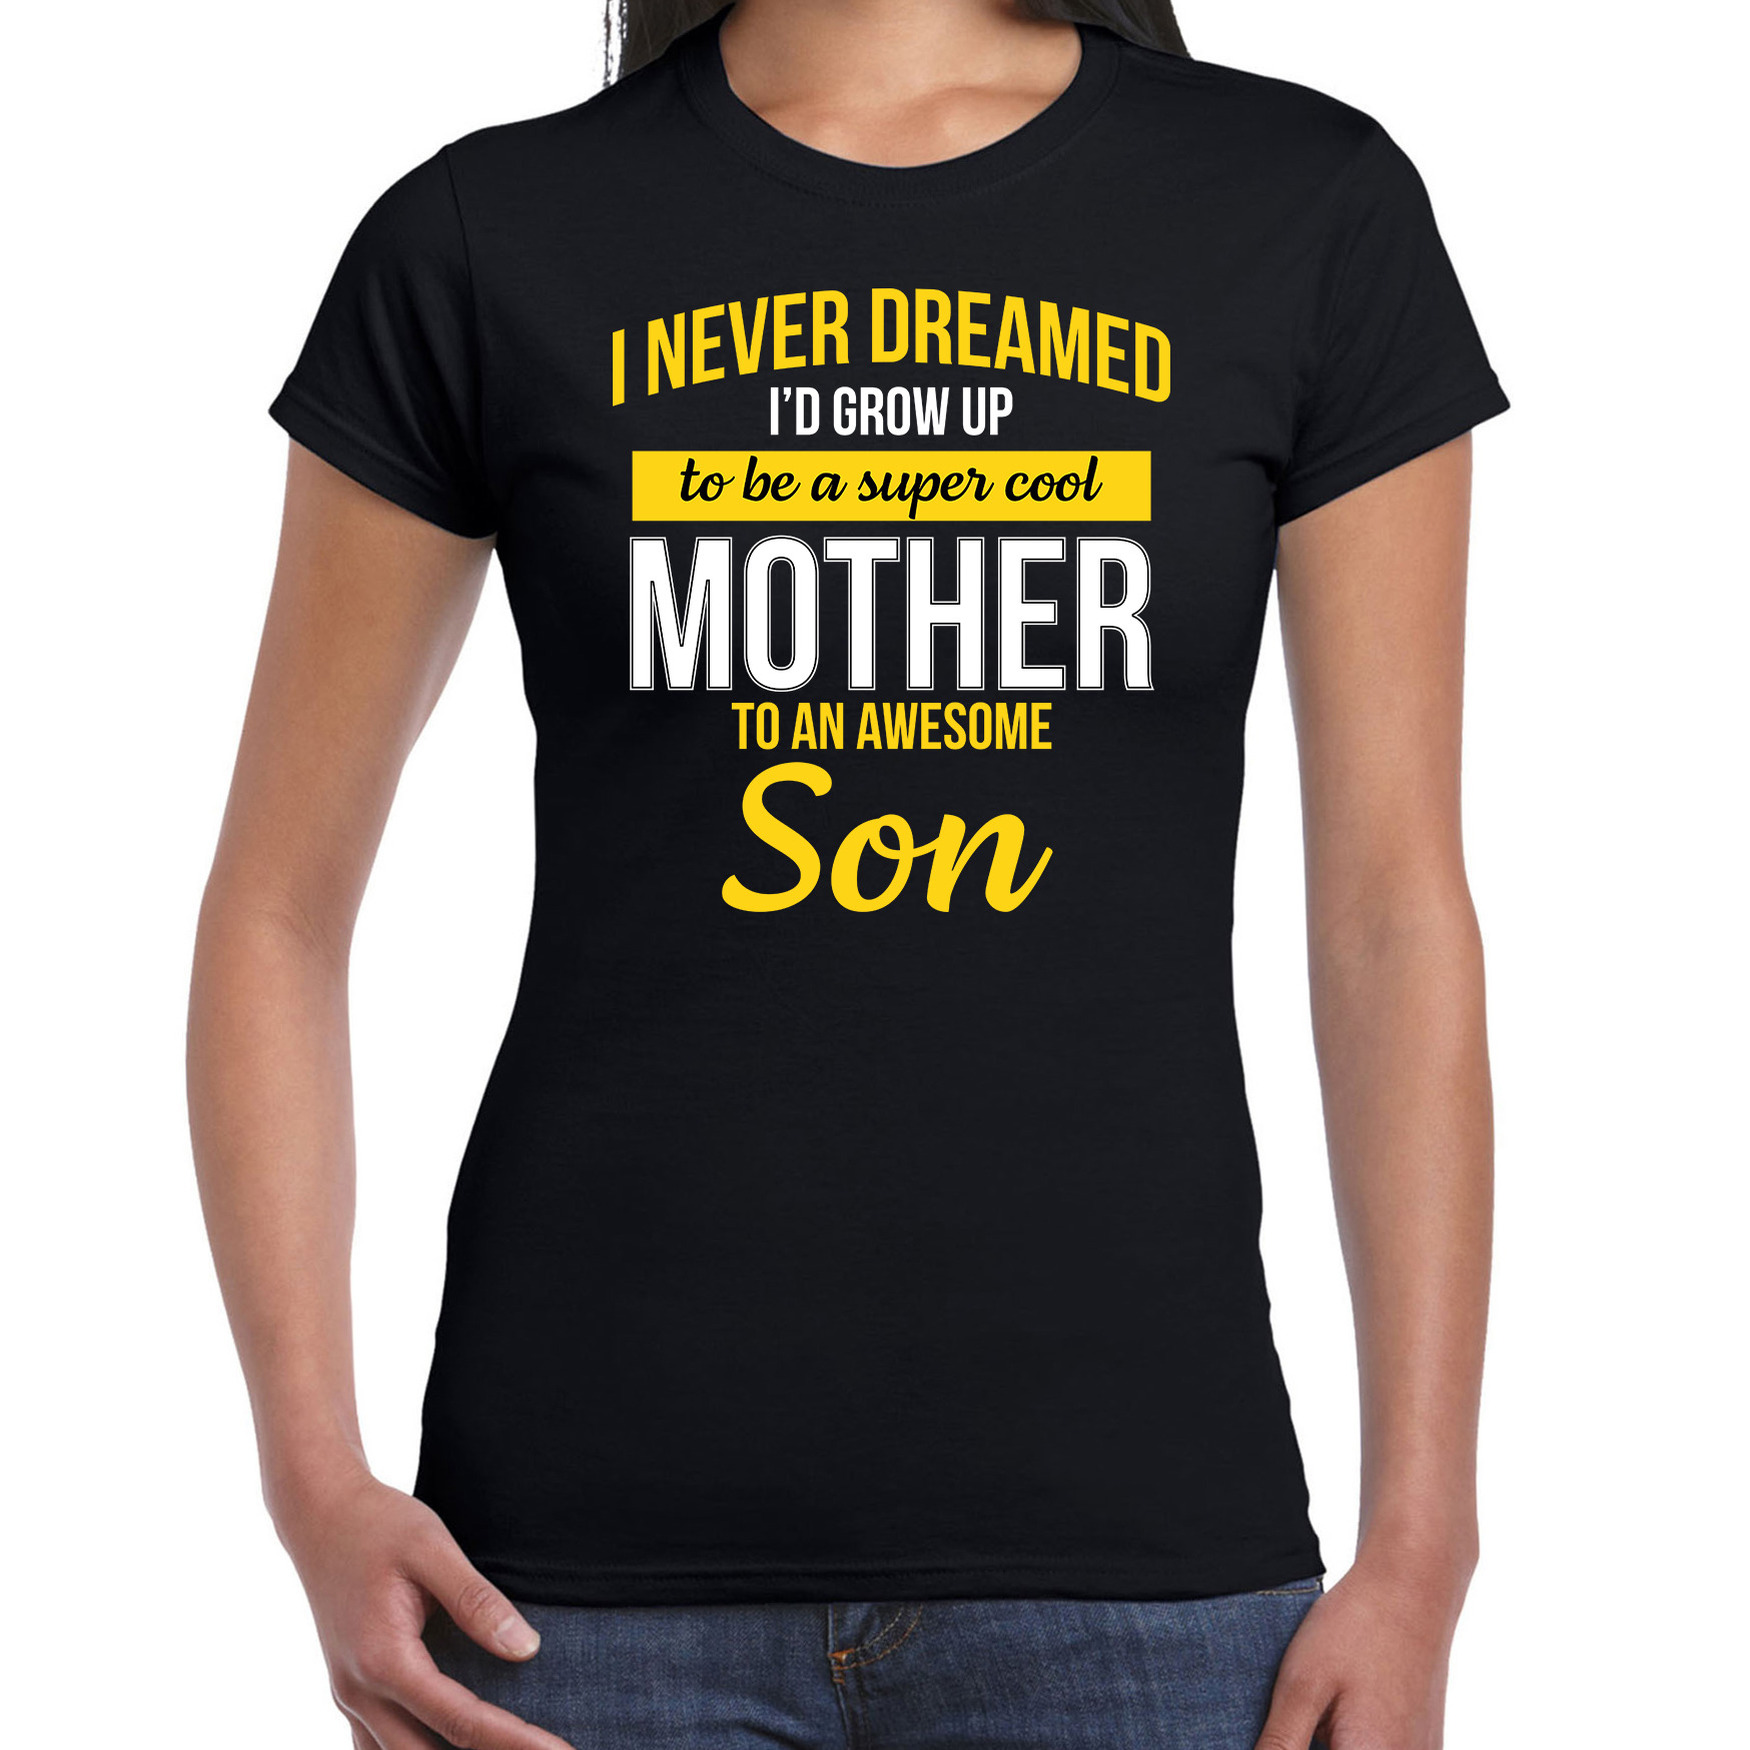 Never dreamed cool mother awesome son moeder van zoon cadeau t shirt zwart voor dames